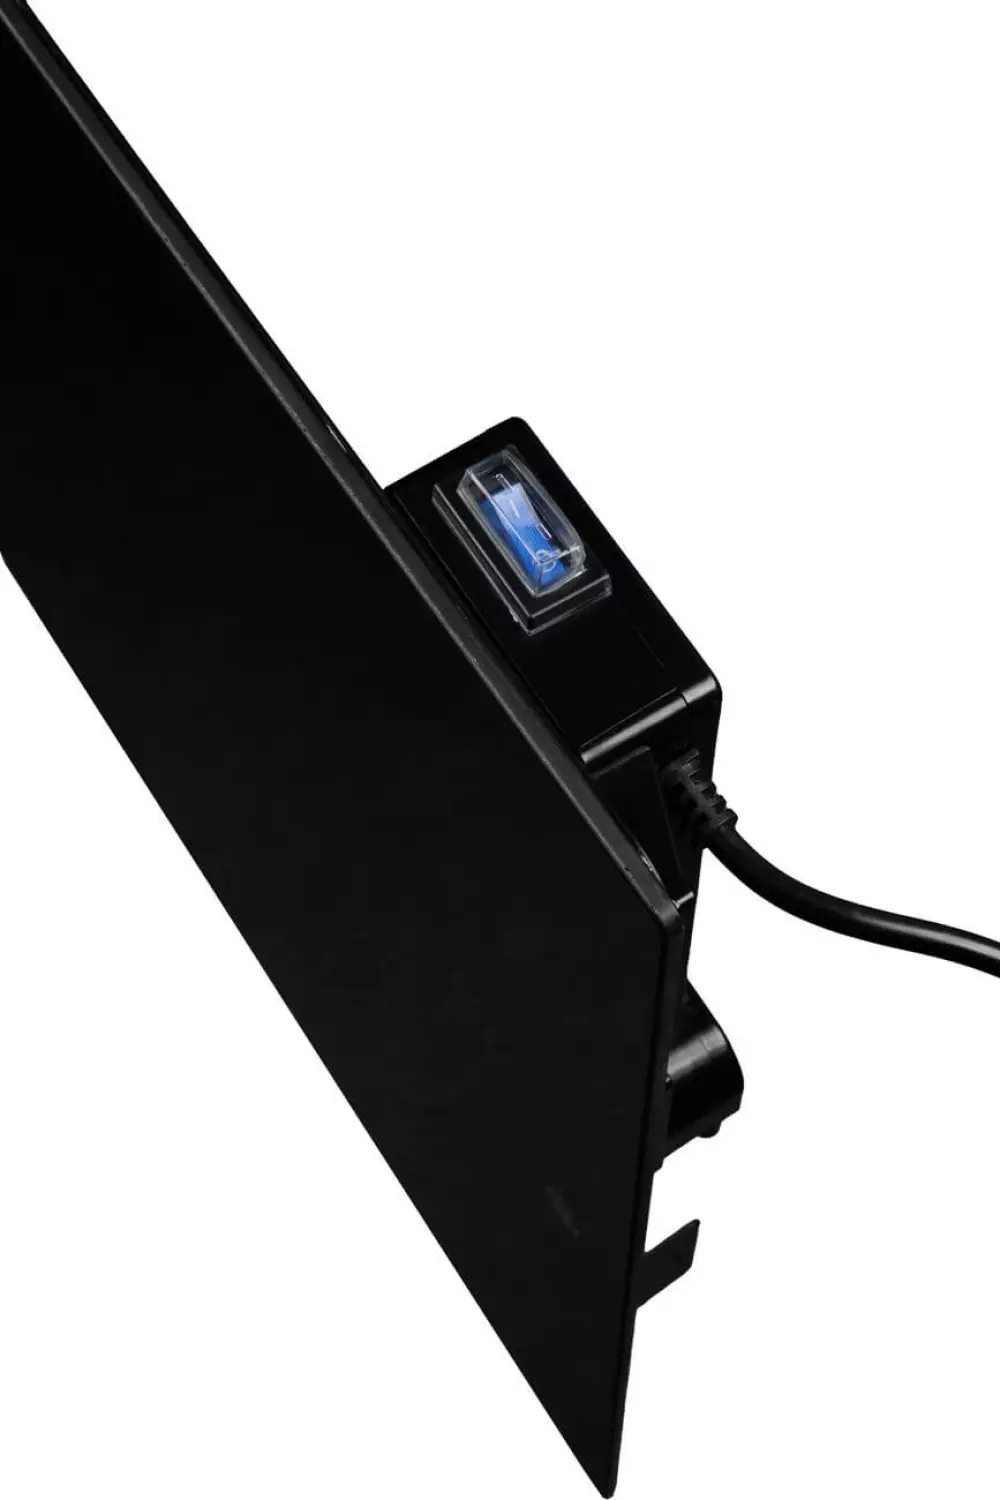 Eurom Sani 600 WiFi Panneau infrarouge noir - 600W - 11,1kg-image